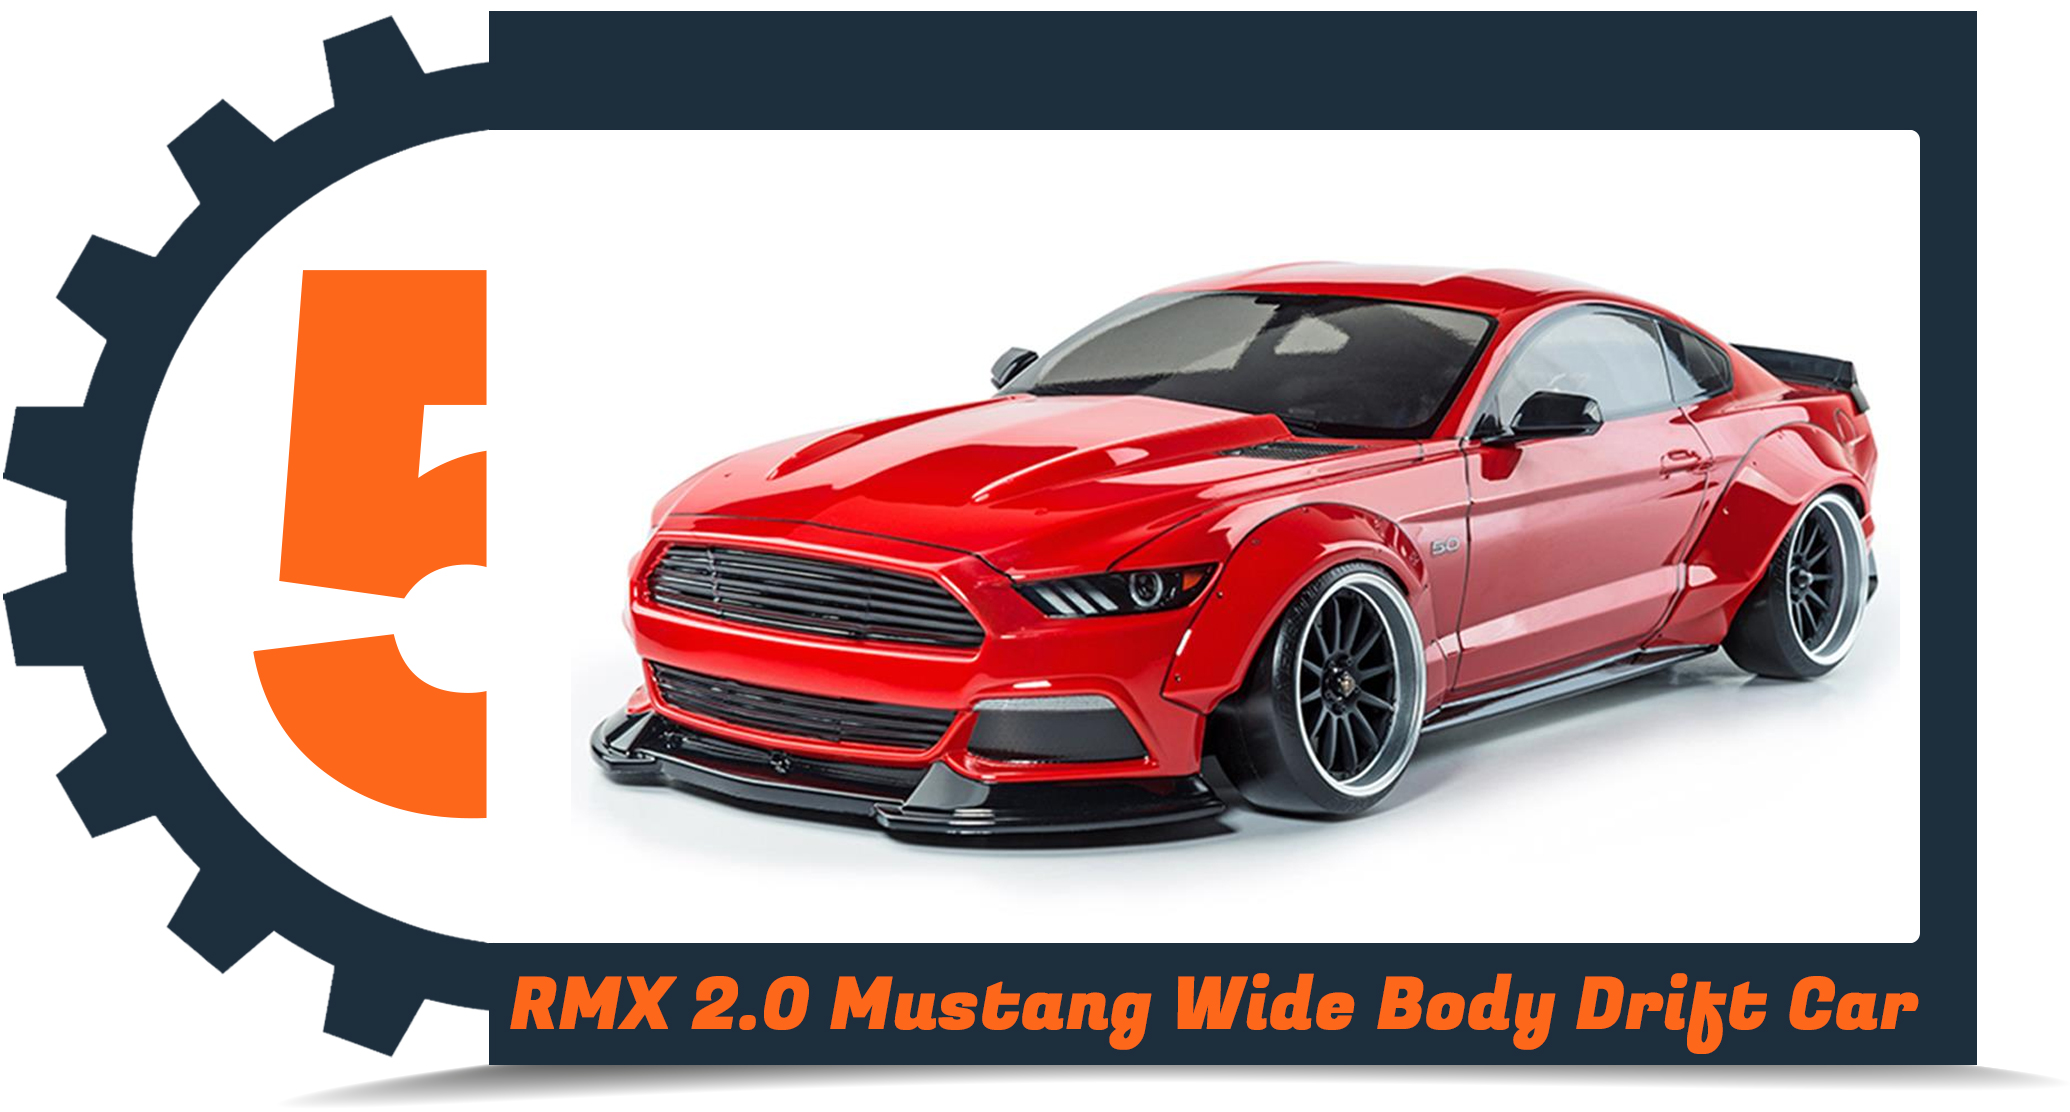 Top 10 RC Cars - Number 5 - RMX 2.0 Mustang Drift Car